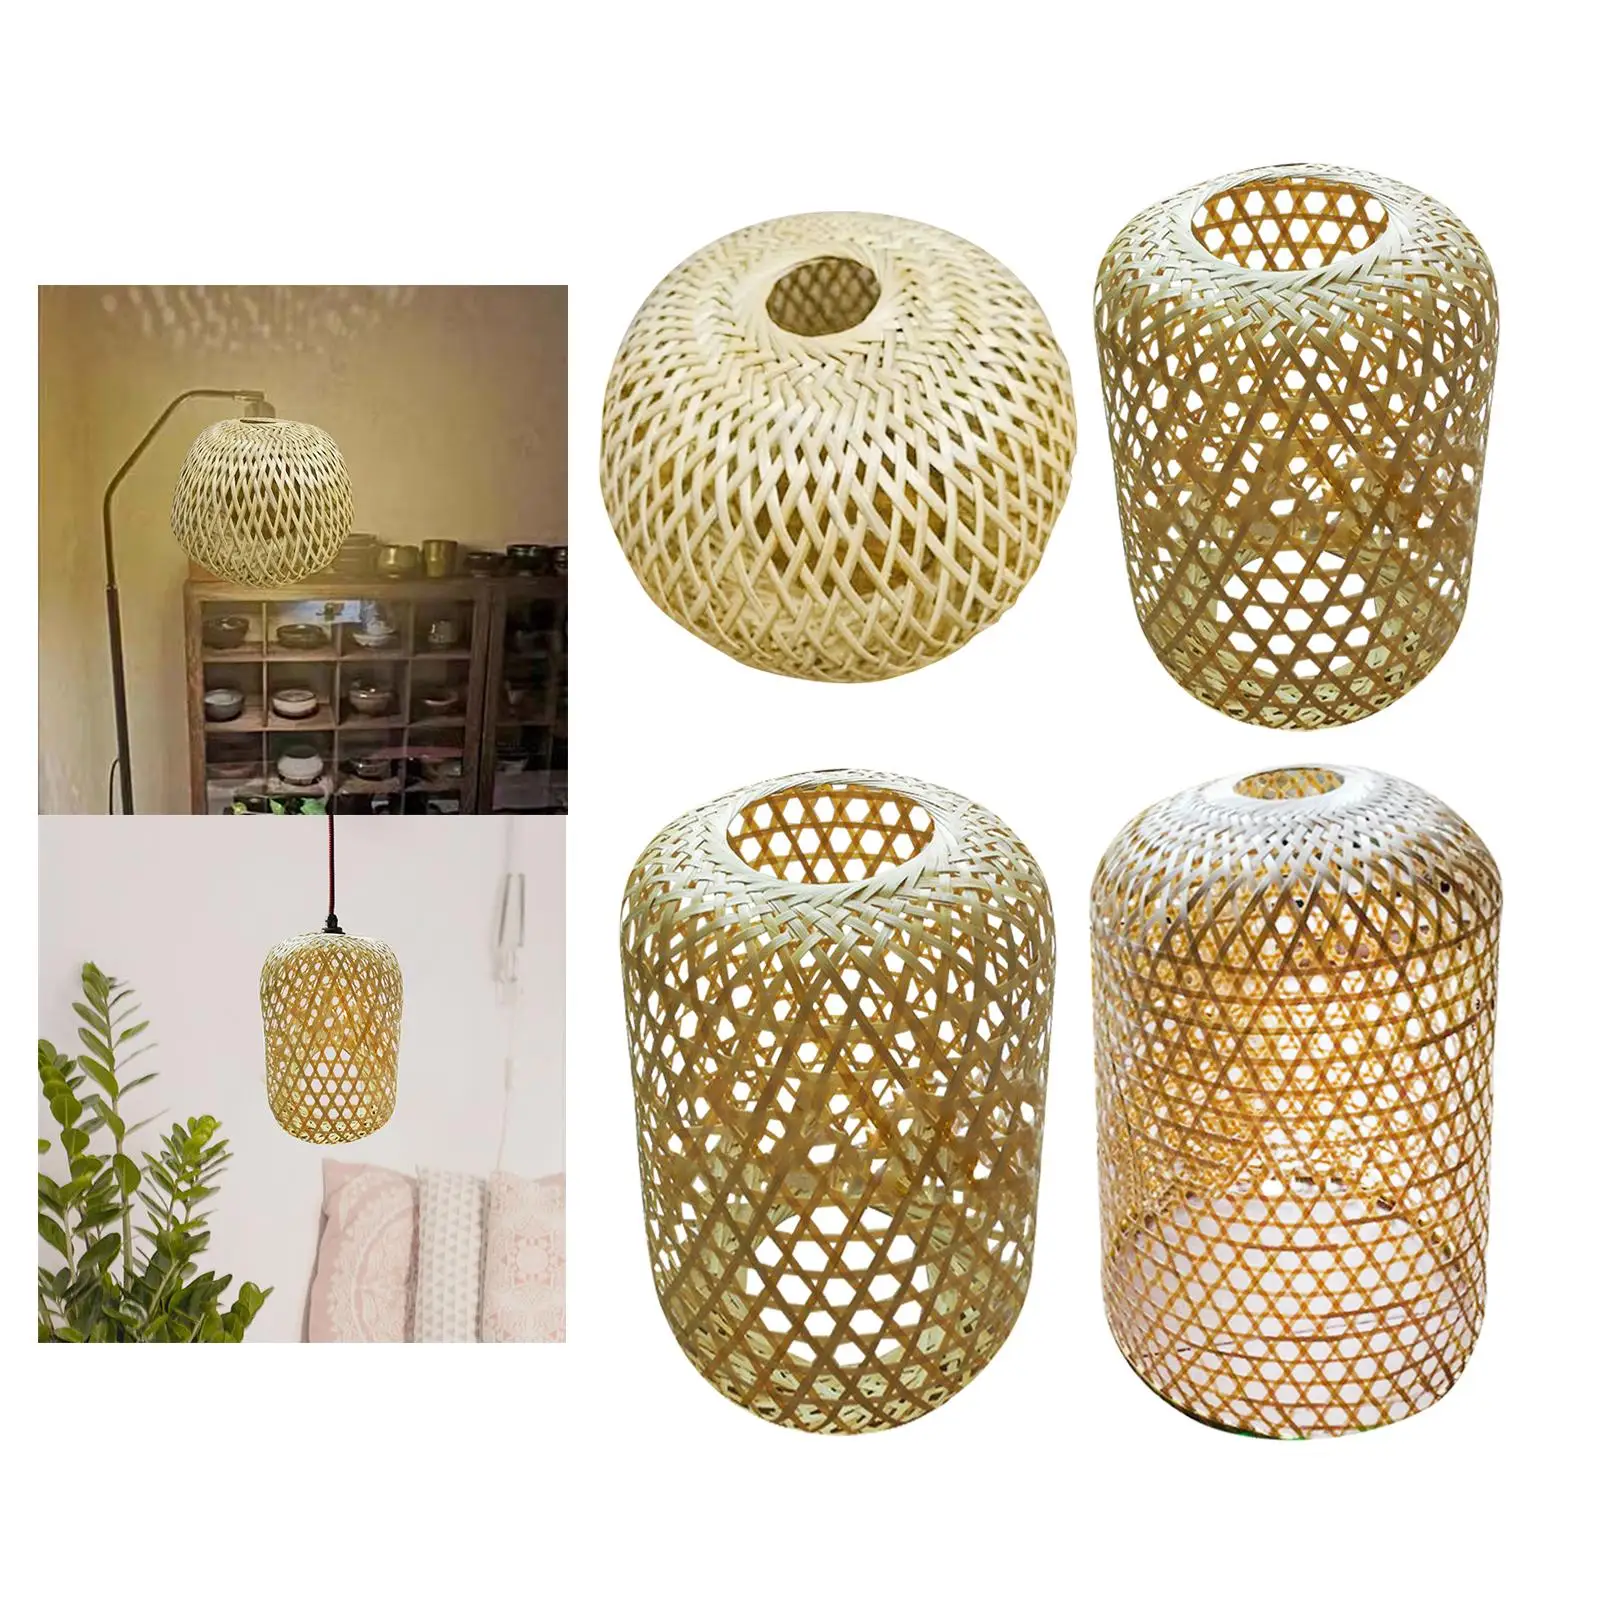 Handmade Weaving Lamp Shade Lantern Ceiling Light Cover Ornament Lamp Accessory for Cafe Living Room Dining Room Tea Decor